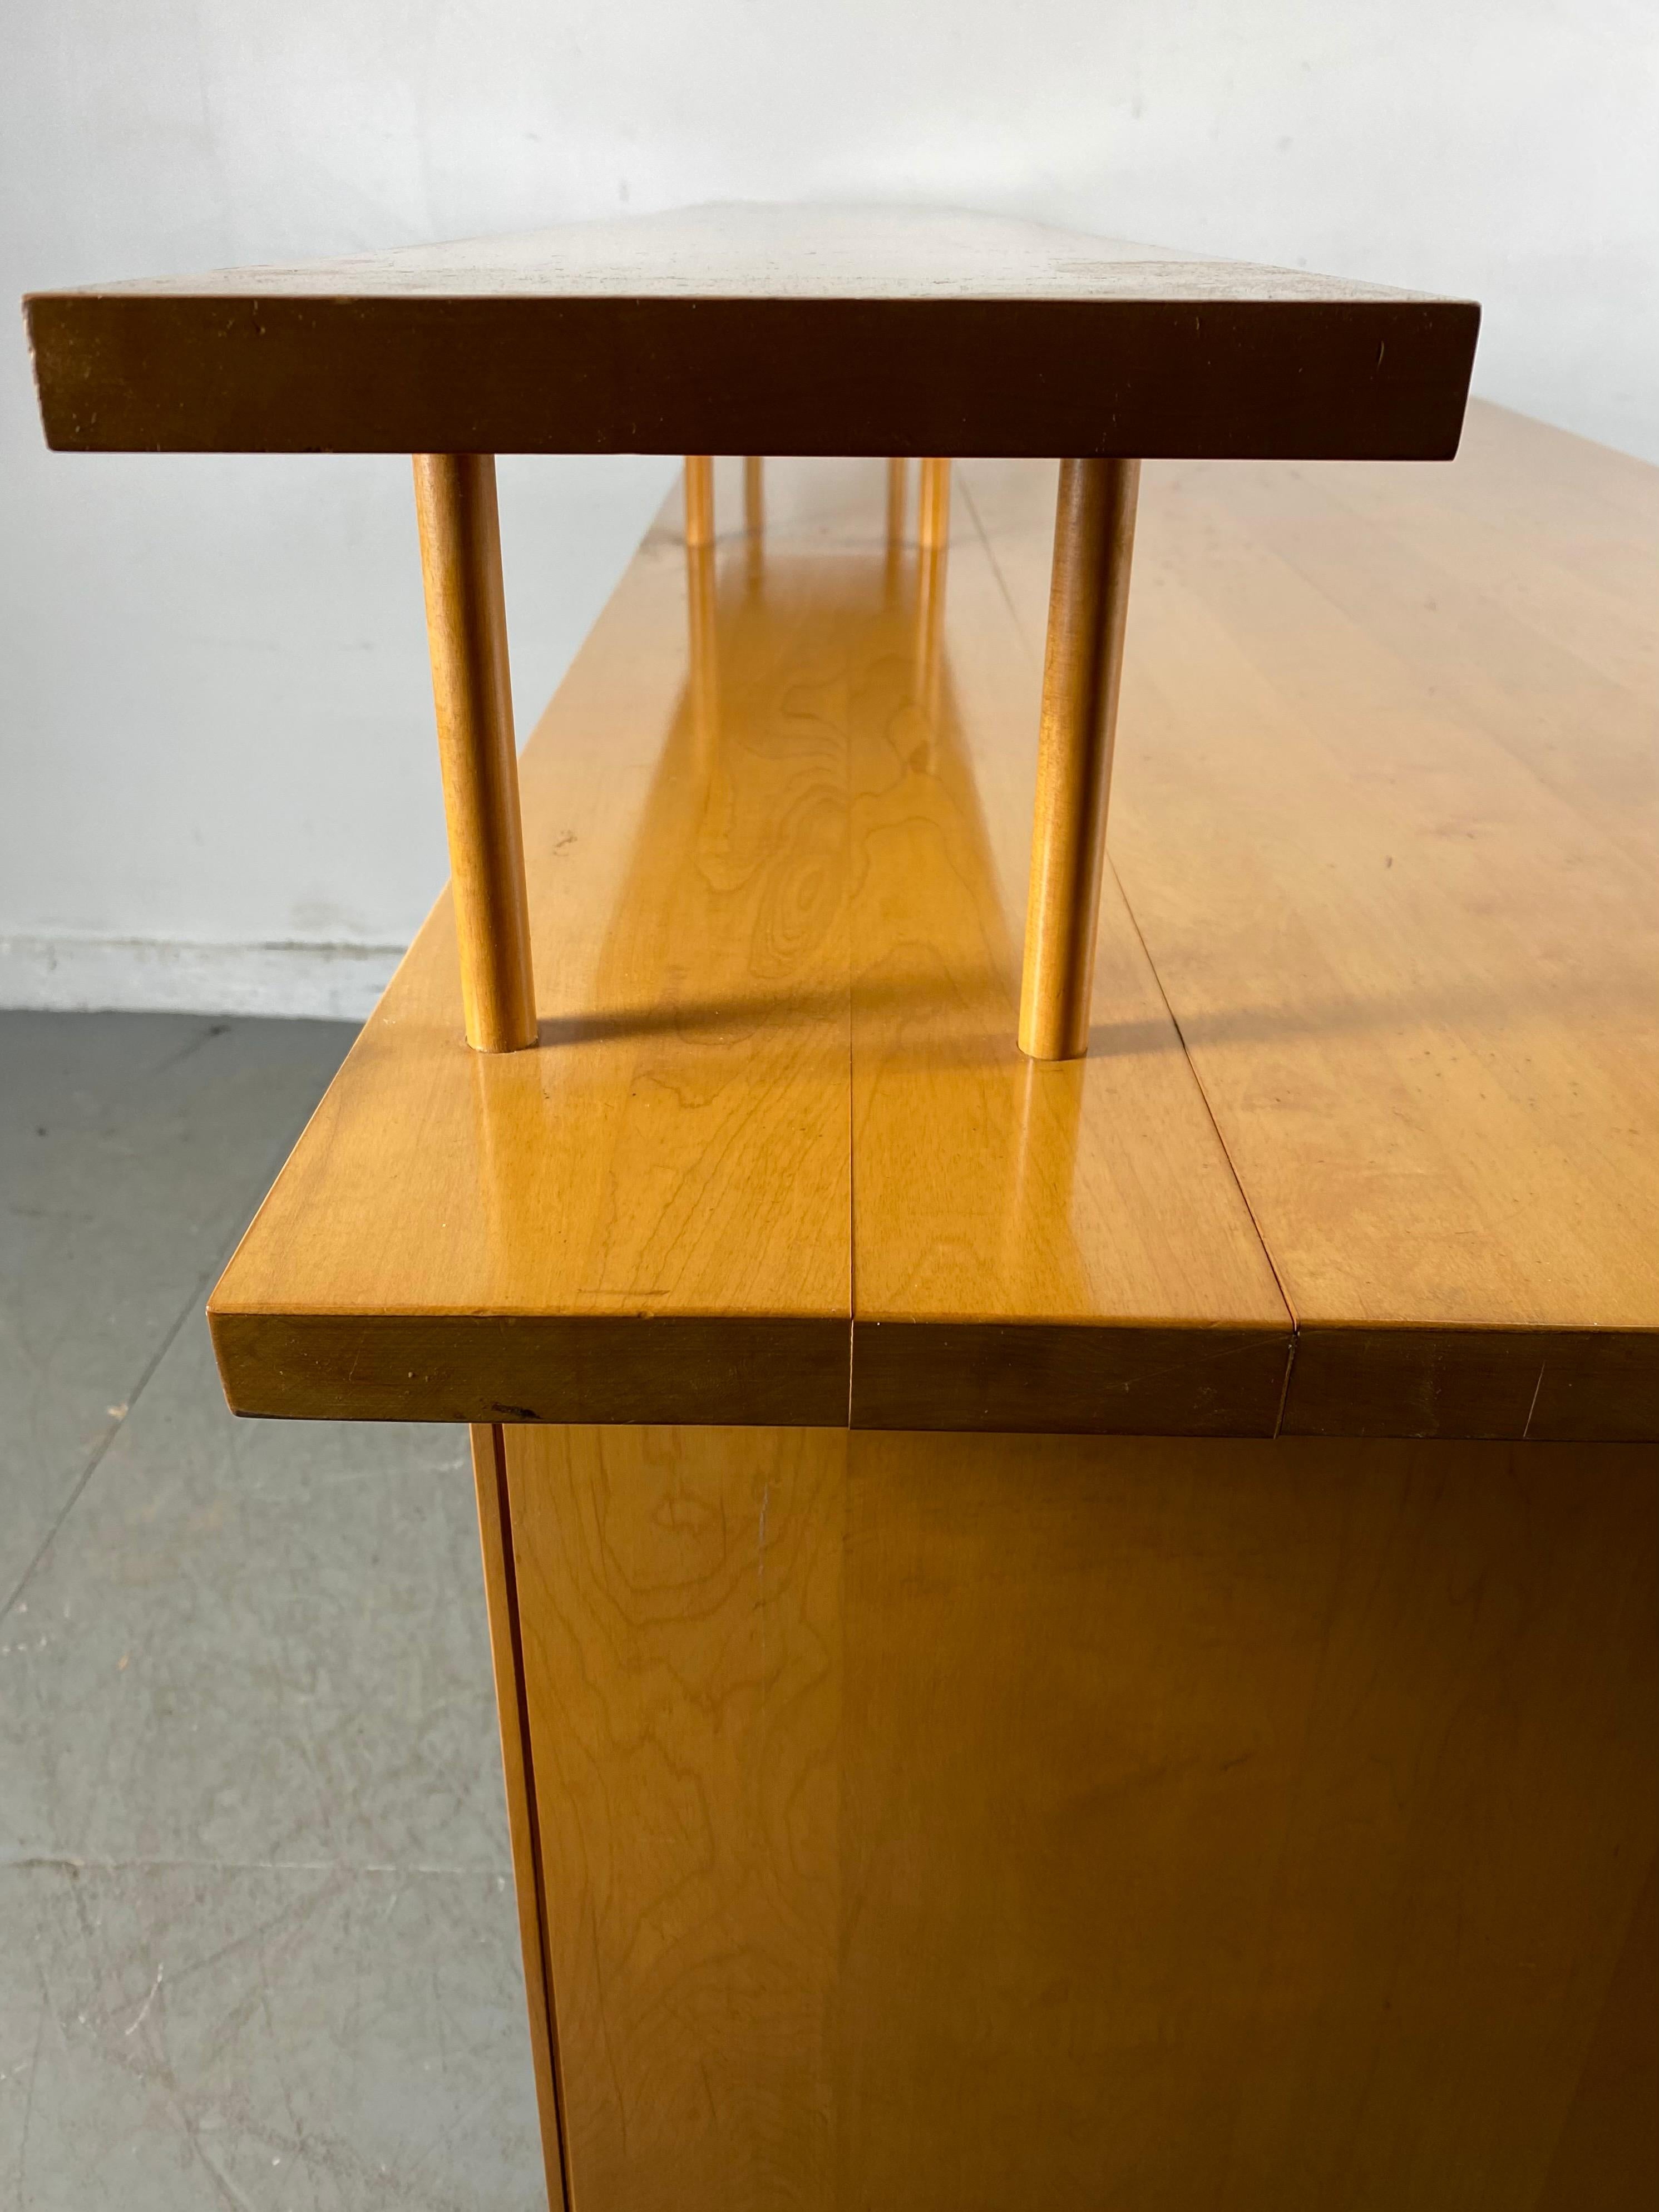 Rare Paul McCobb Desk in Maple, 1950s, Multi-Level, Classic Modernist Design 3